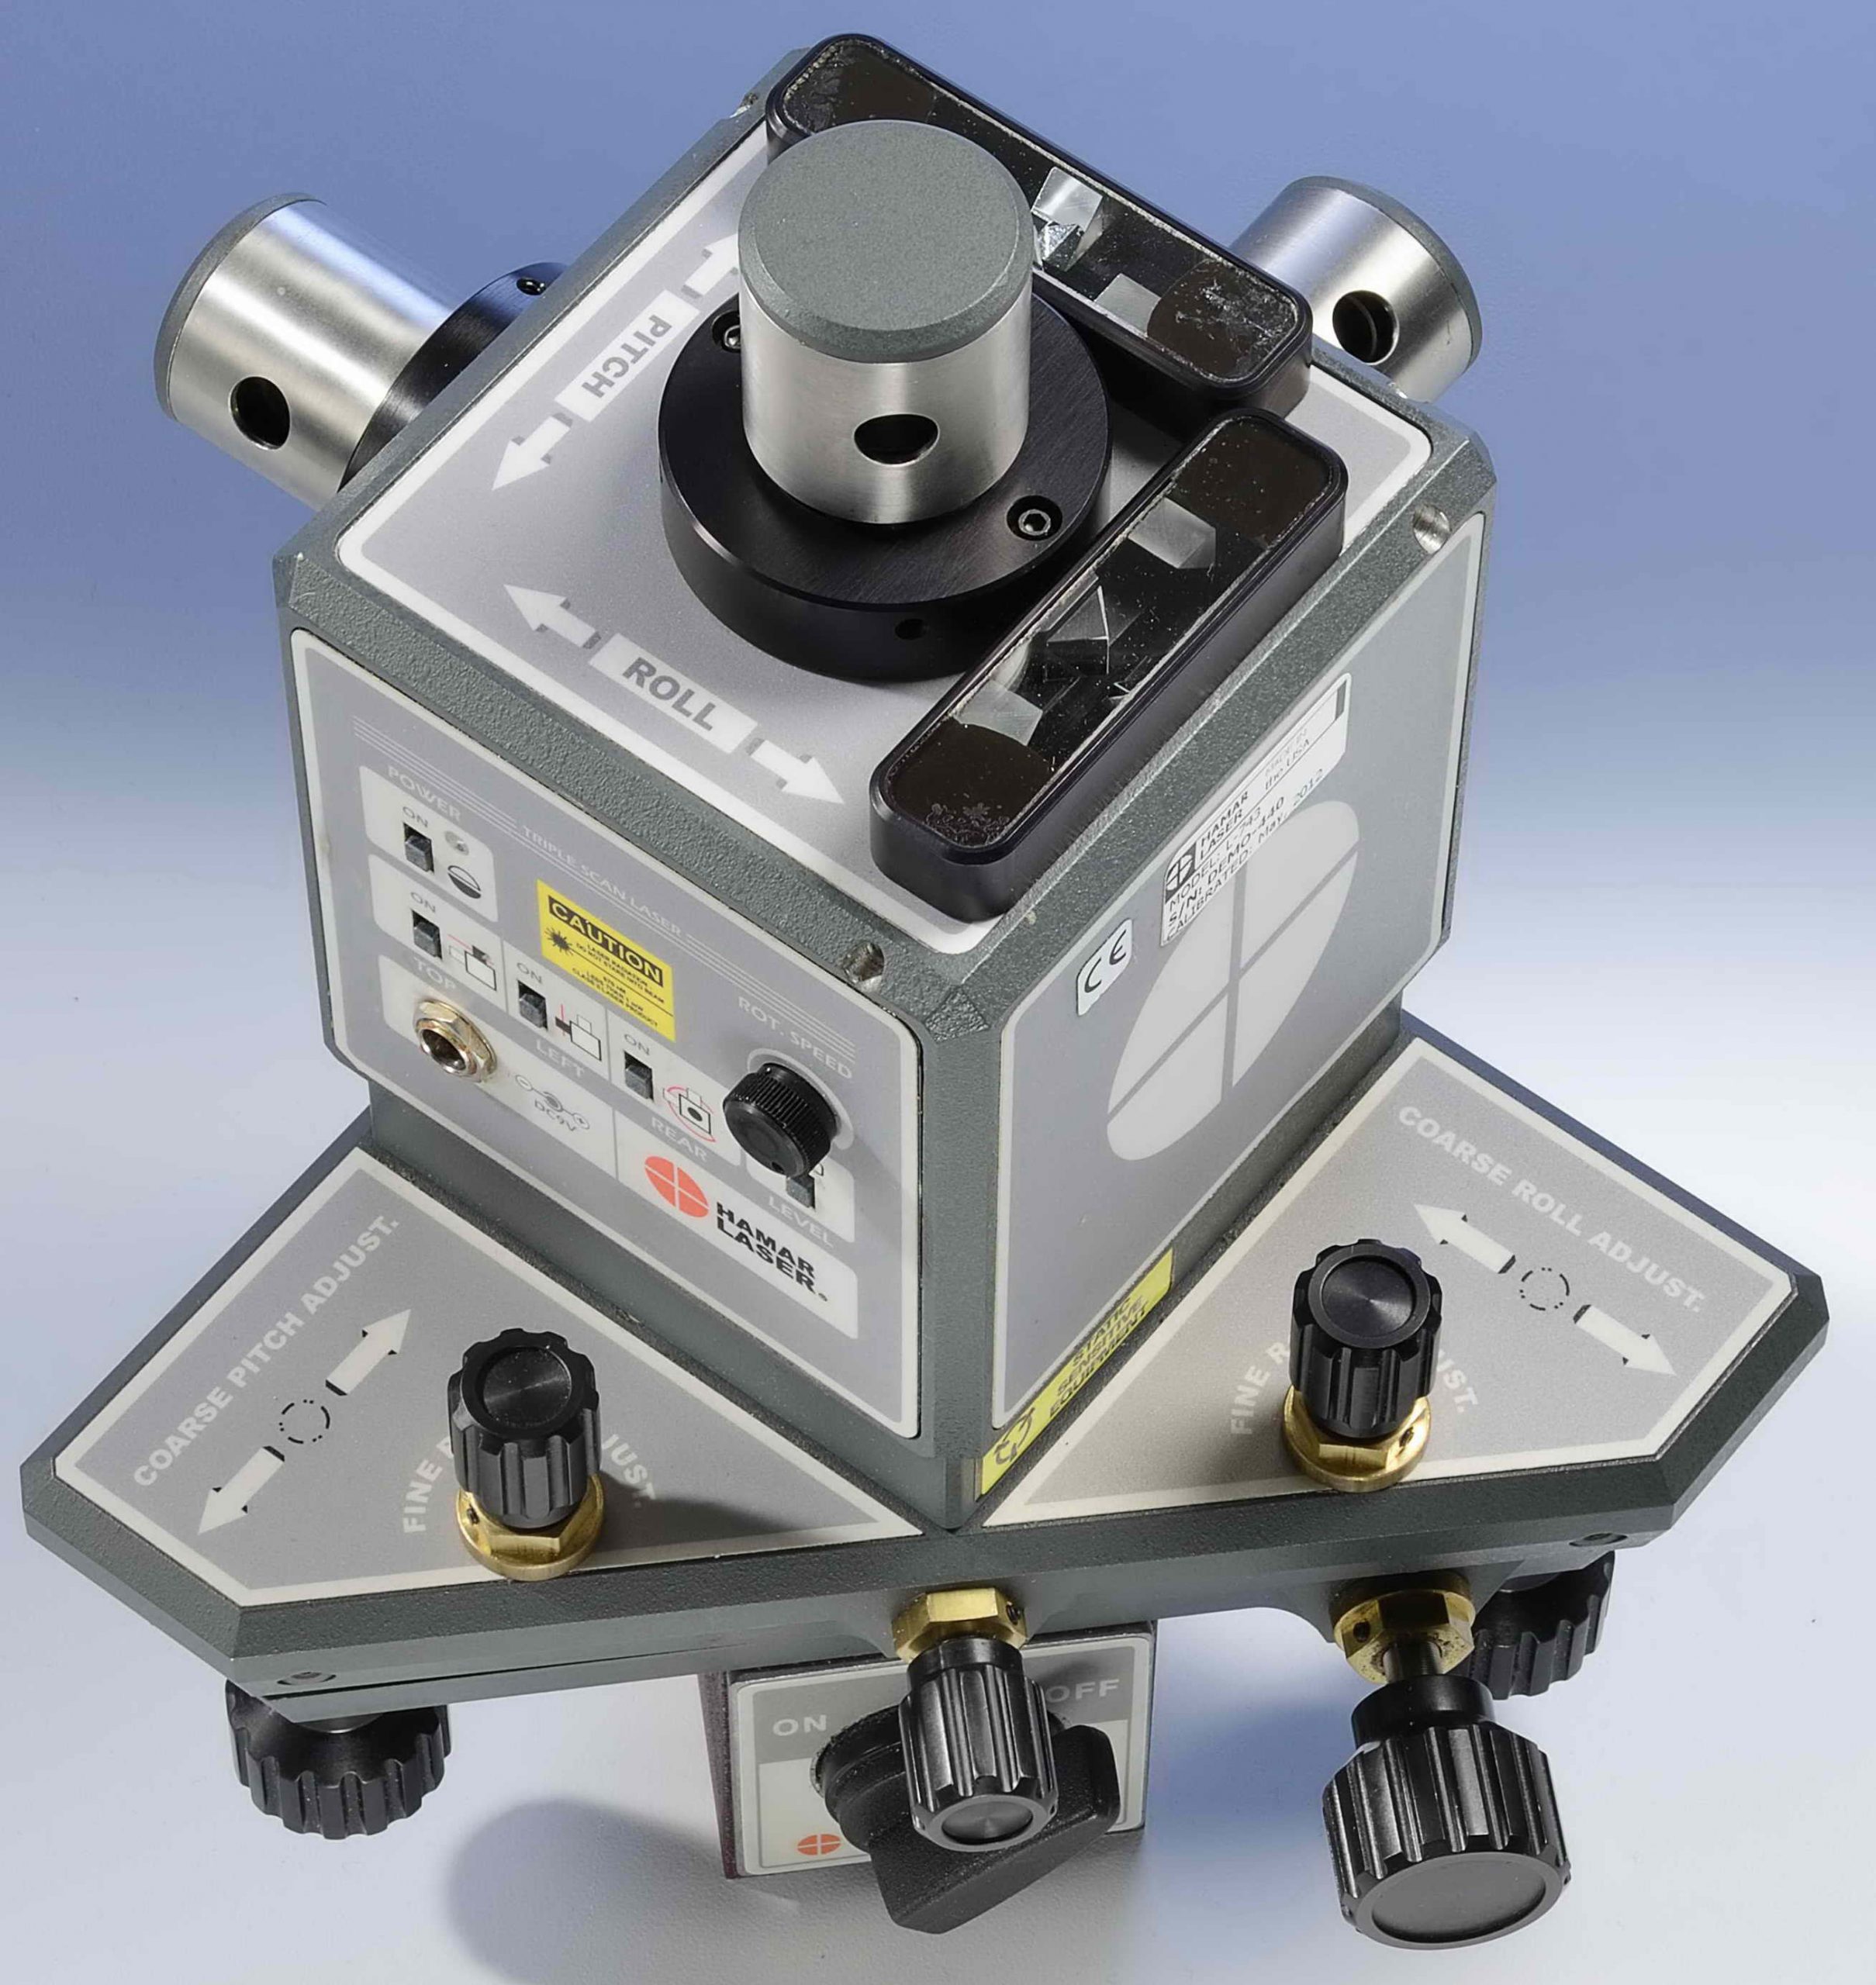 L-733 Precision Triple Scan® Laser - HamarLaser